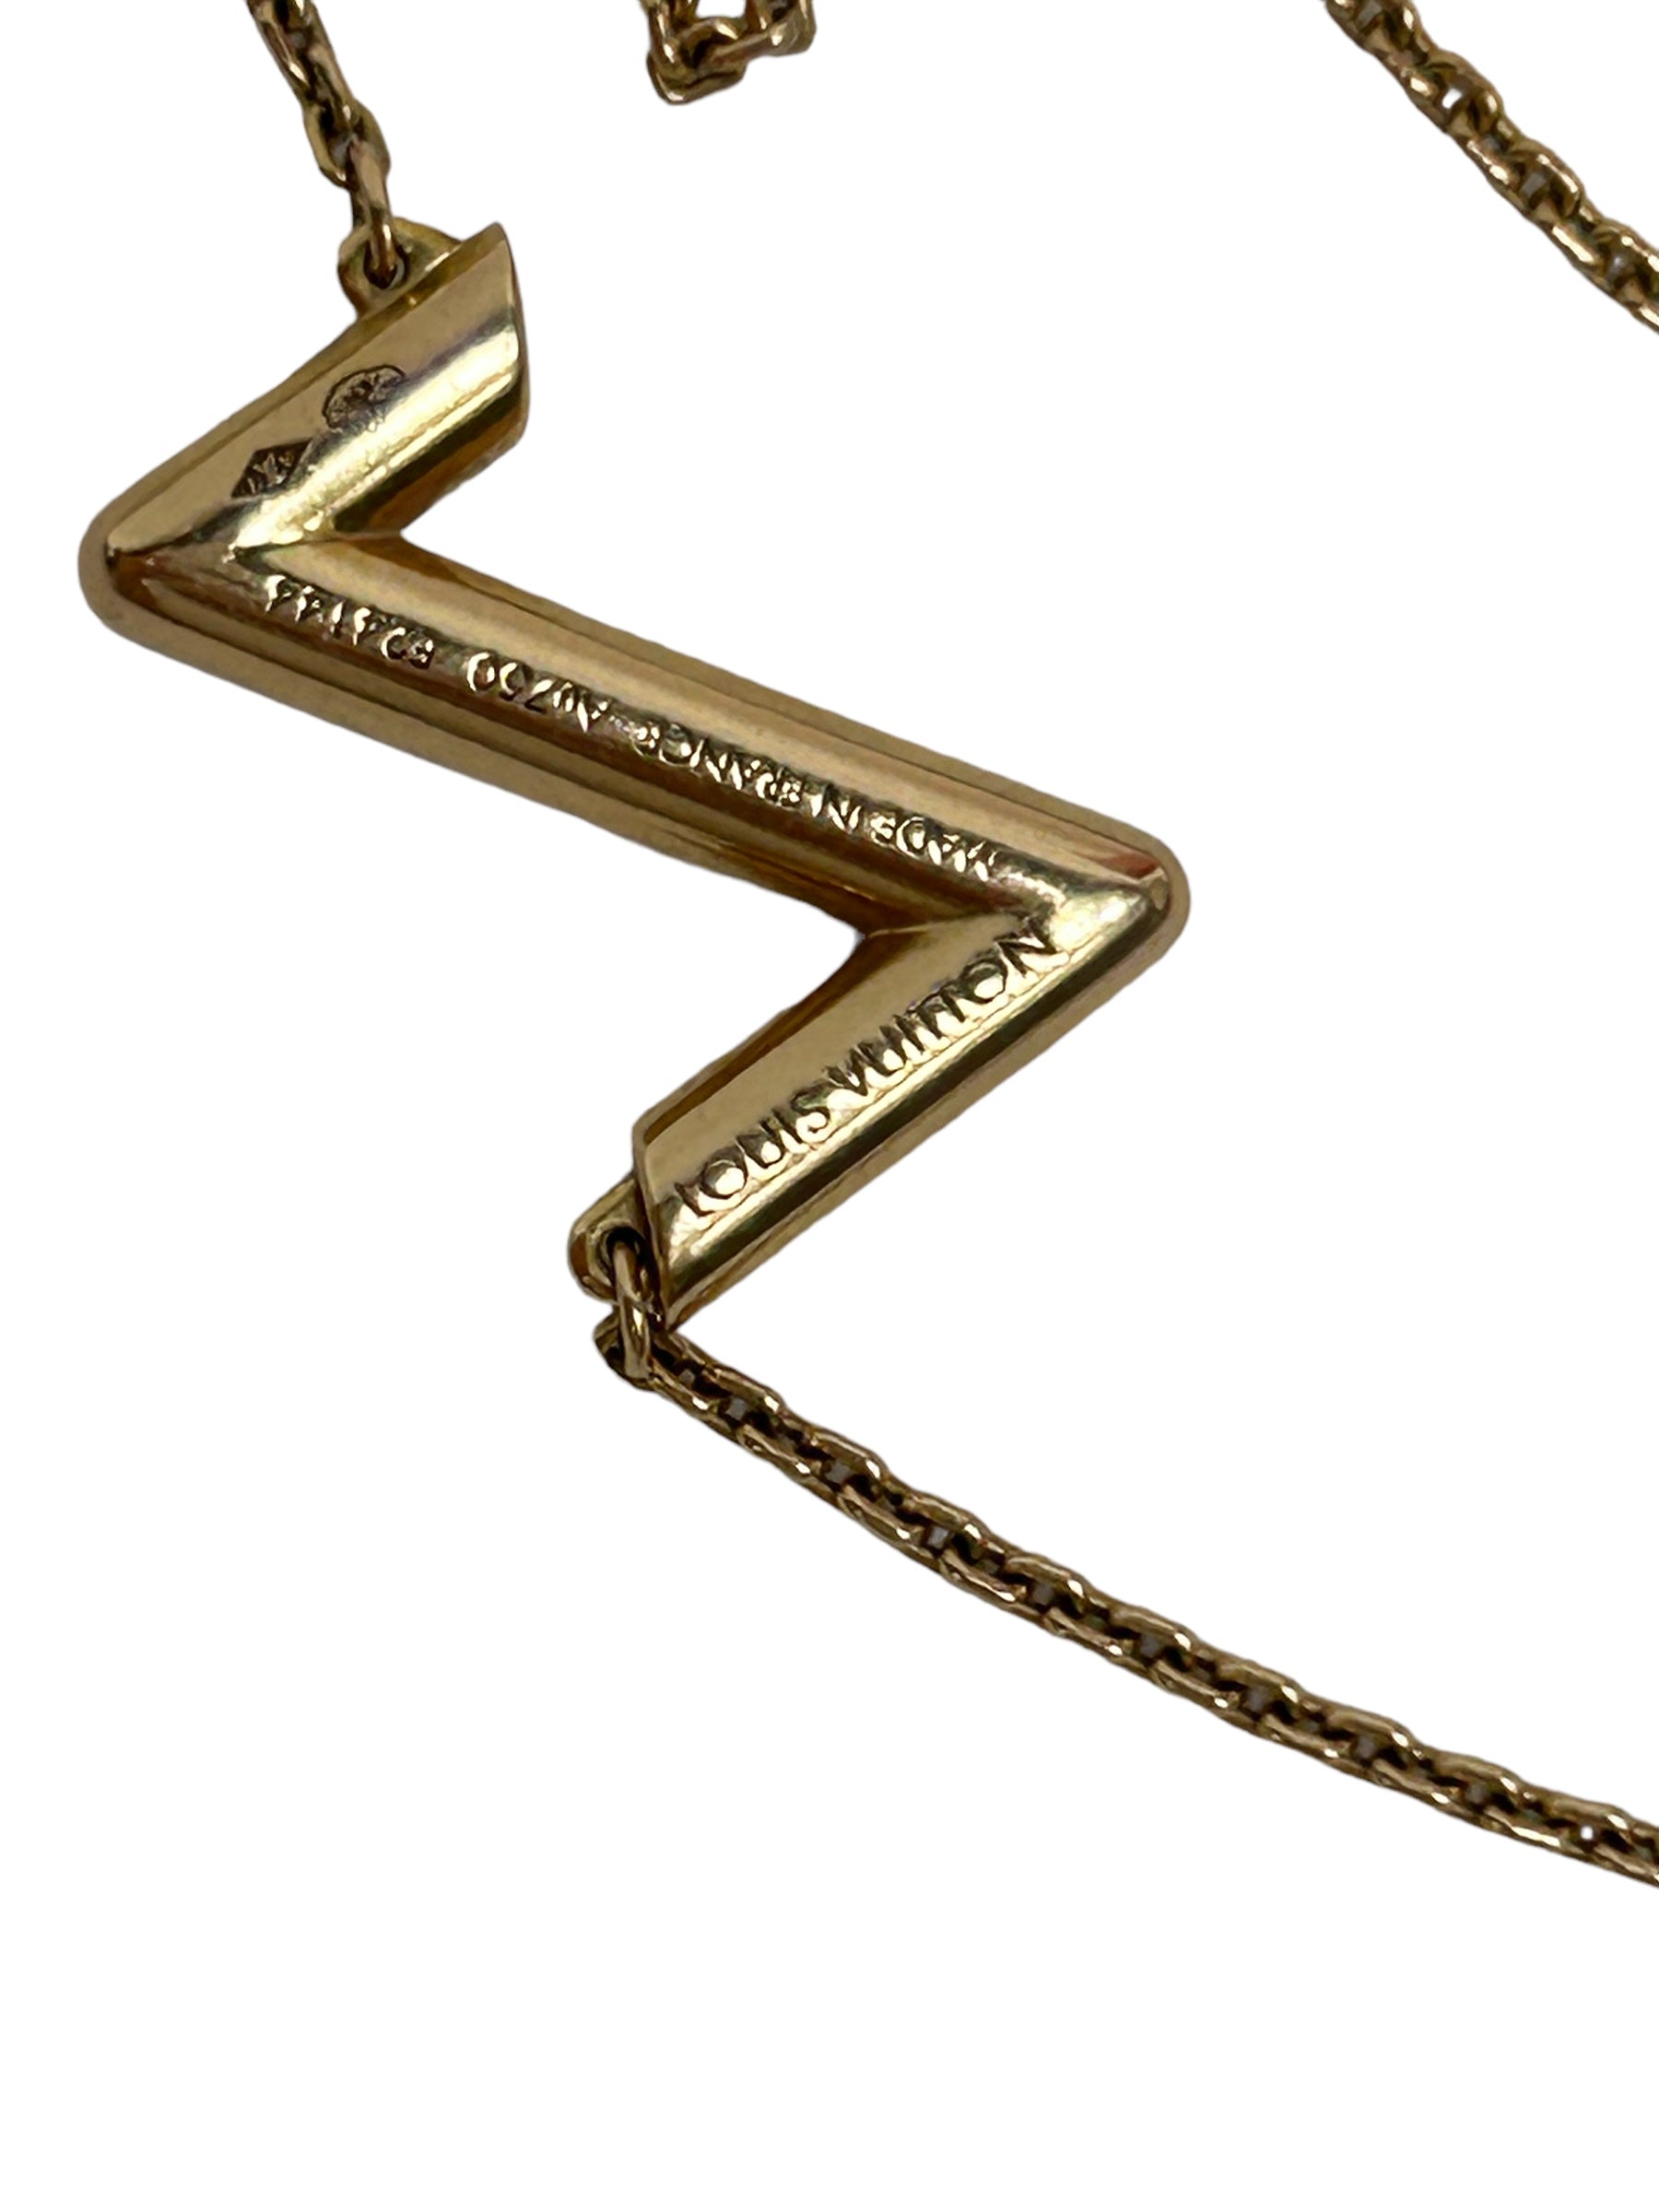 18K Gold Volt Upside Down Pendant Necklace